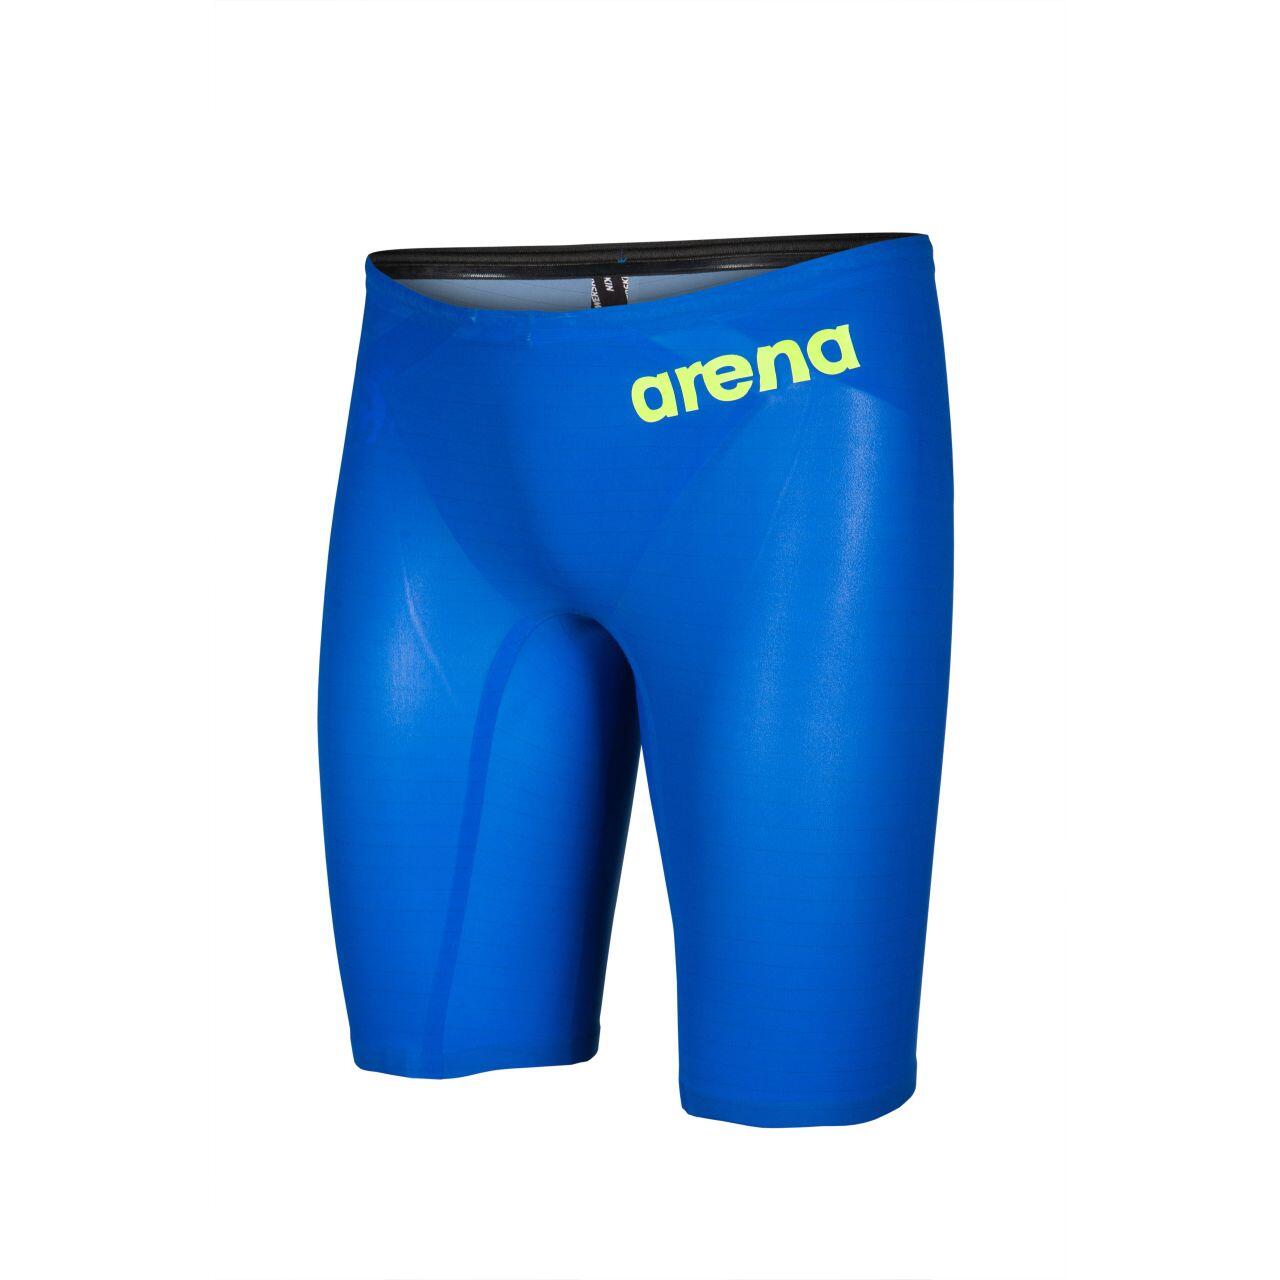 ARENA Arena Powerskin Carbon Air 2 Jammer - Blue / Grey